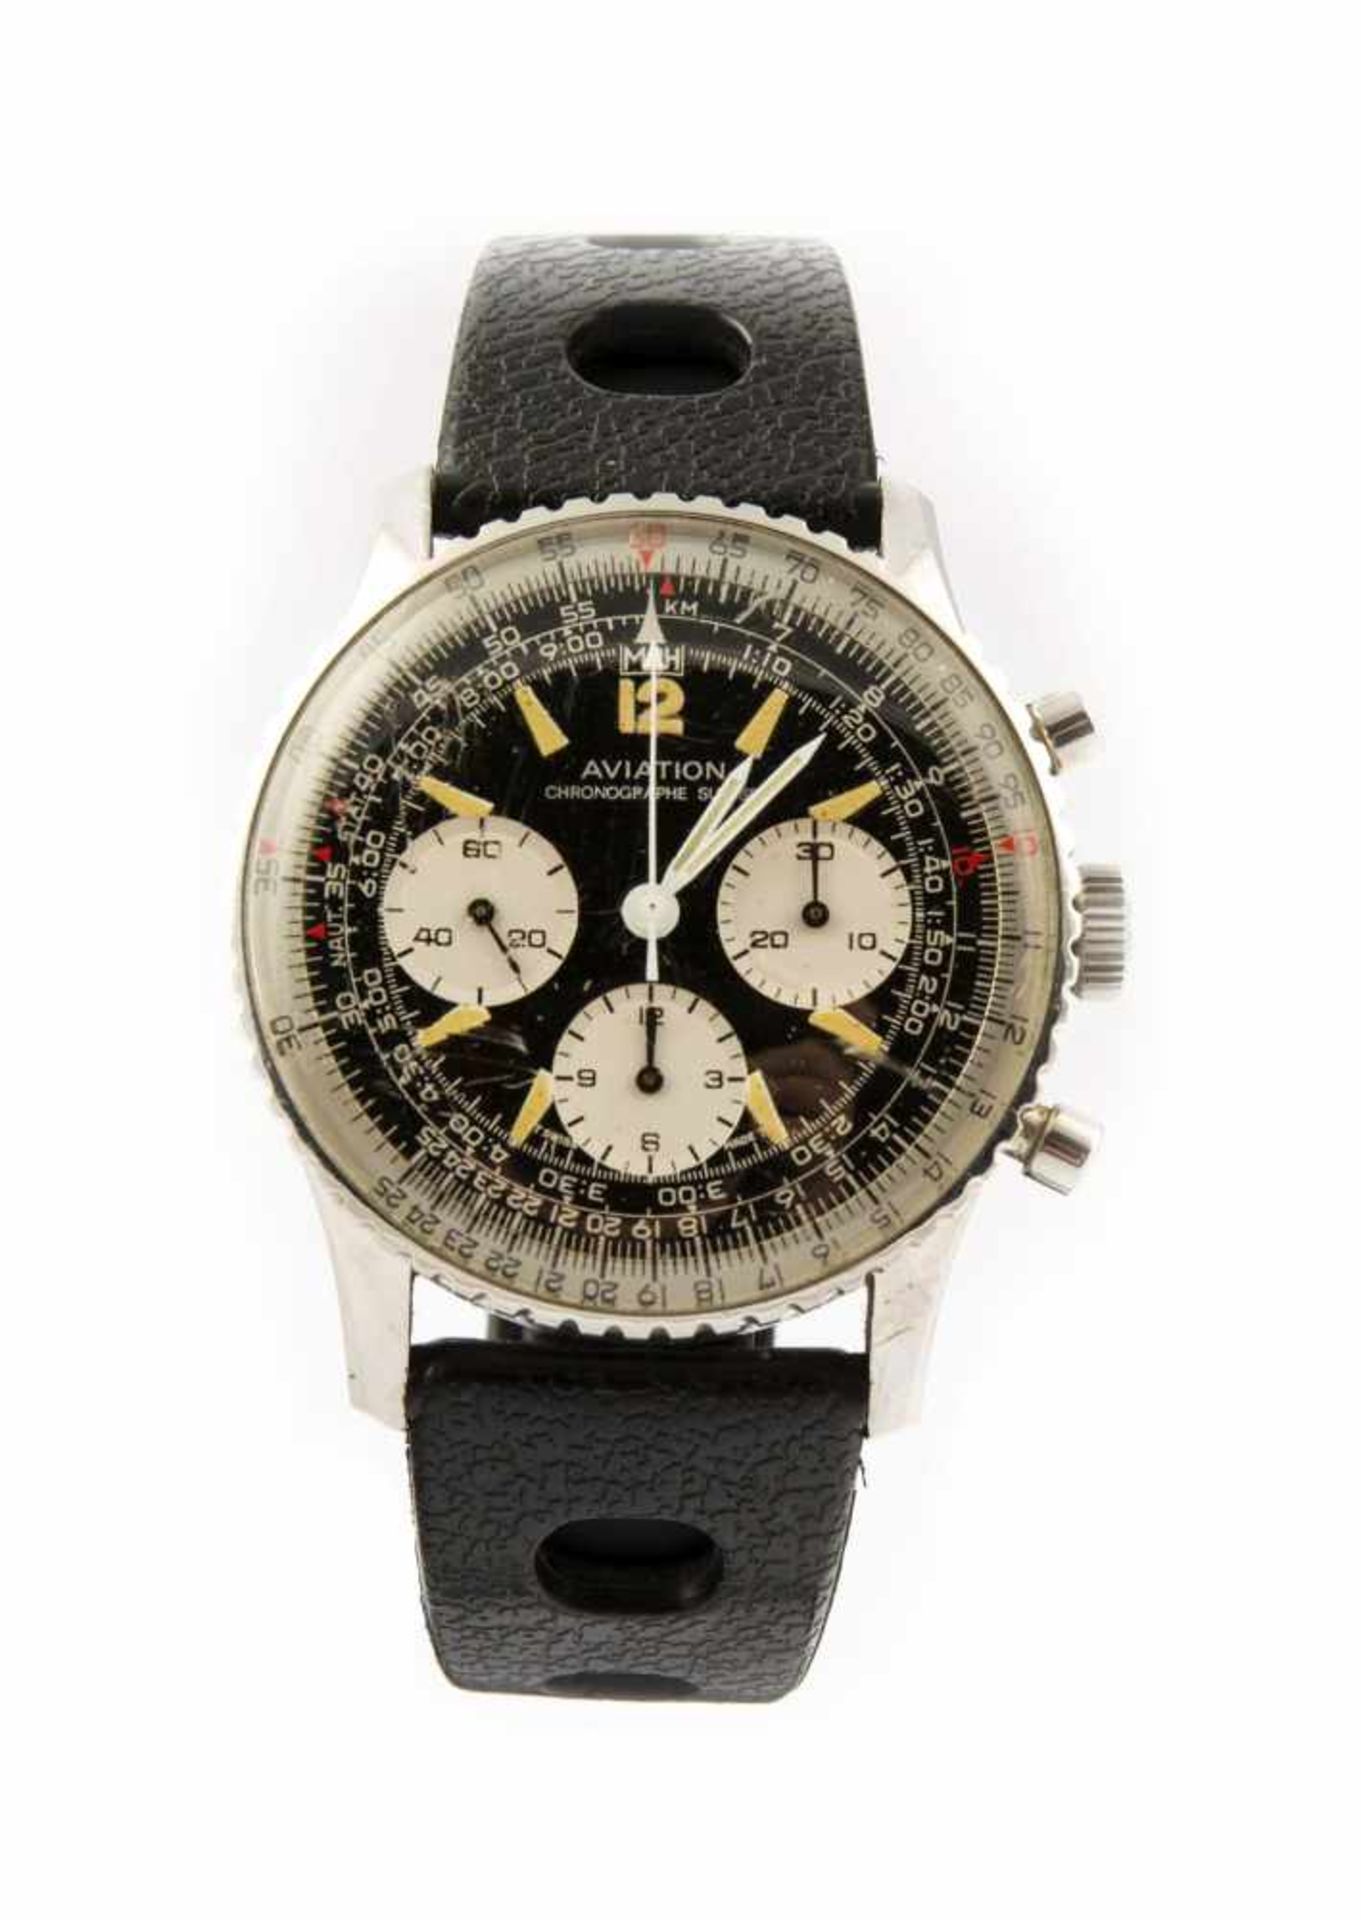 Breitling Aviation Chronographe